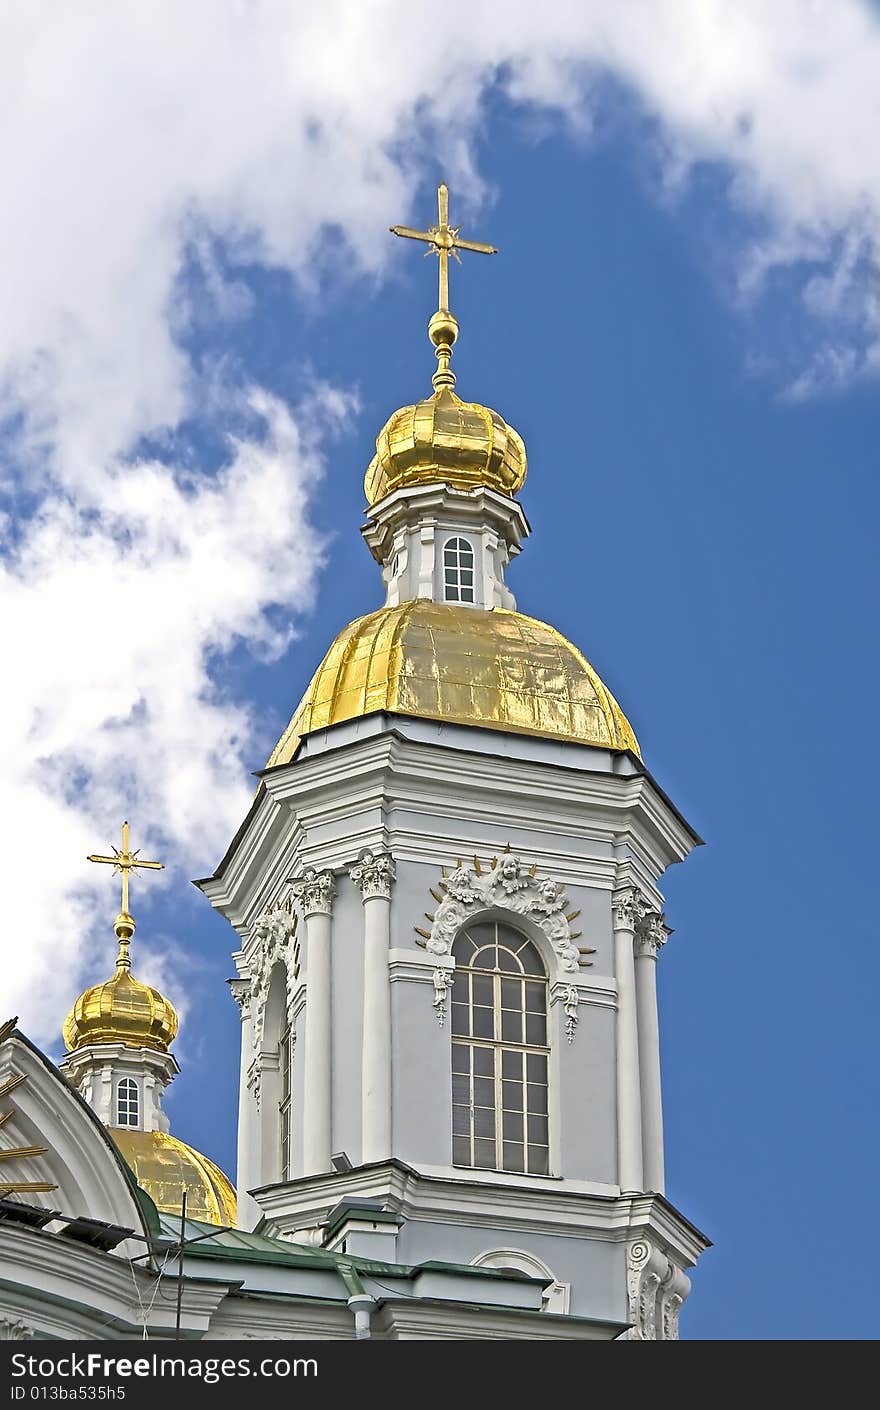 Dome of russian orthodox church. Dome of russian orthodox church